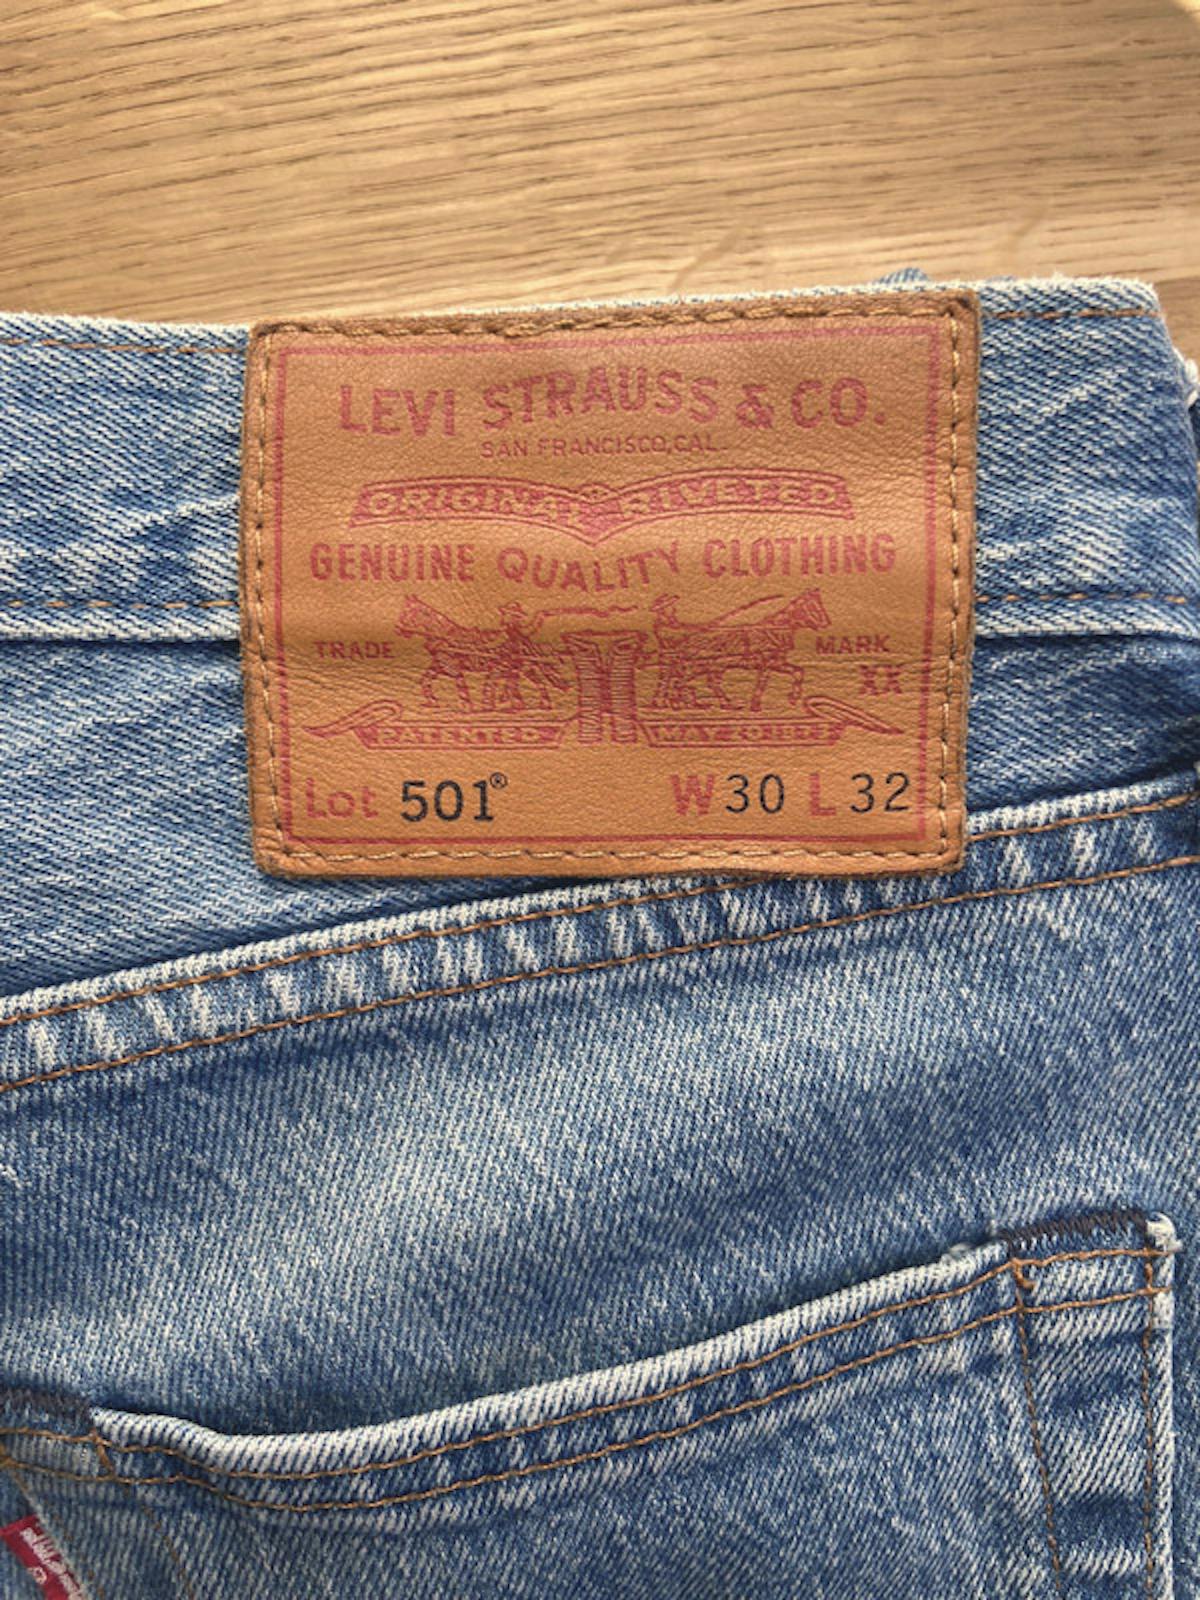 Iconic Labels: Levi Strauss | Dutch Label Shop - US